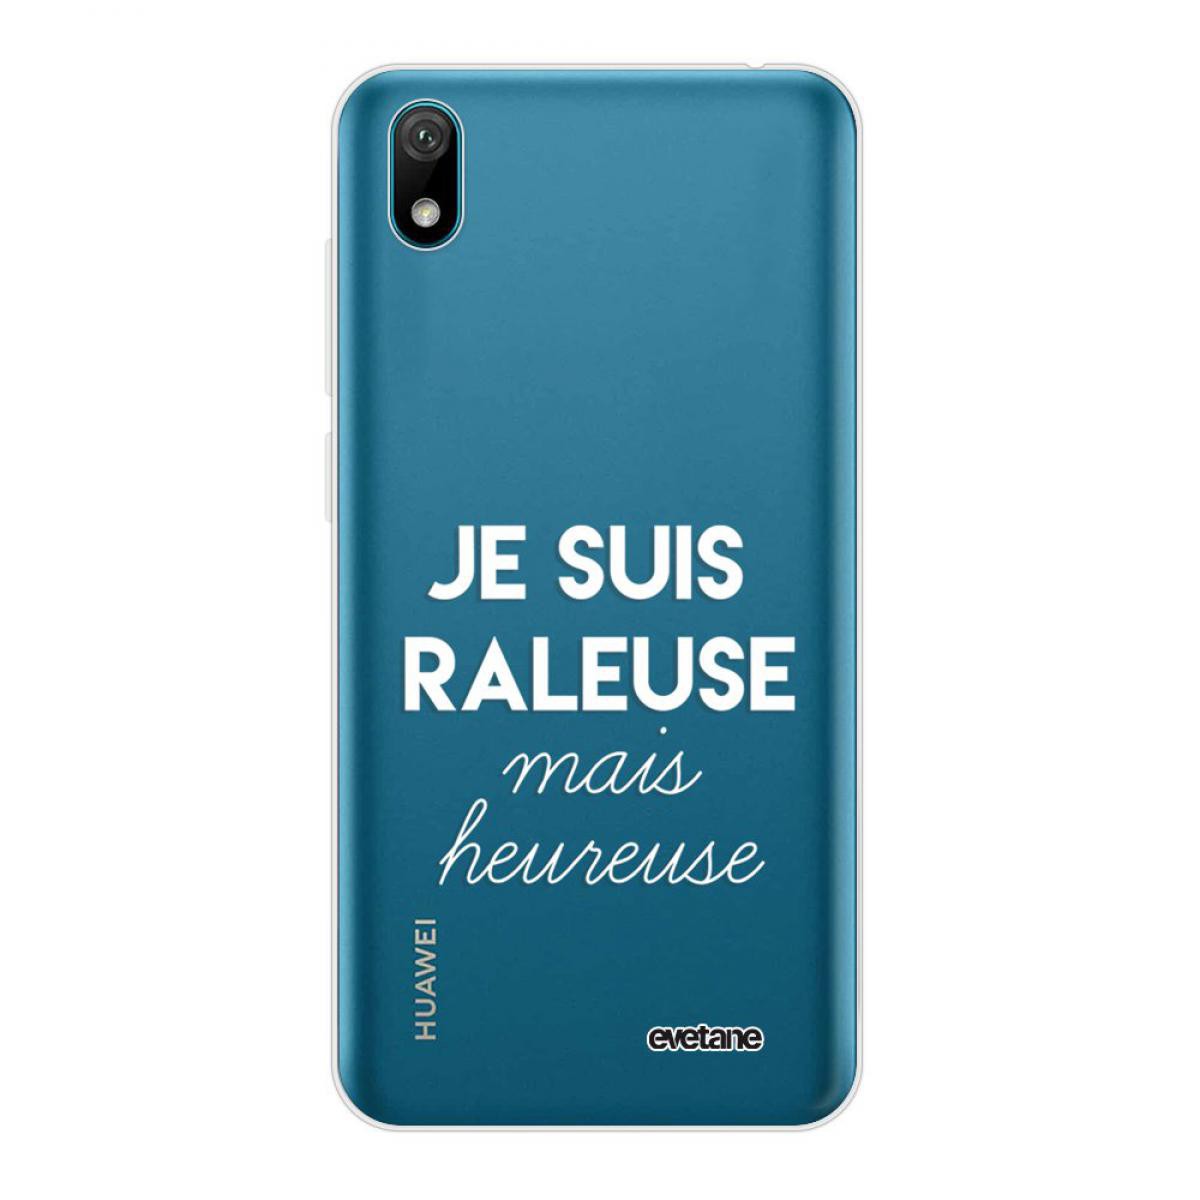 Evetane - Coque Huawei Y5 2019 souple transparente Raleuse mais heureuse blanc Motif Ecriture Tendance Evetane - Coque, étui smartphone